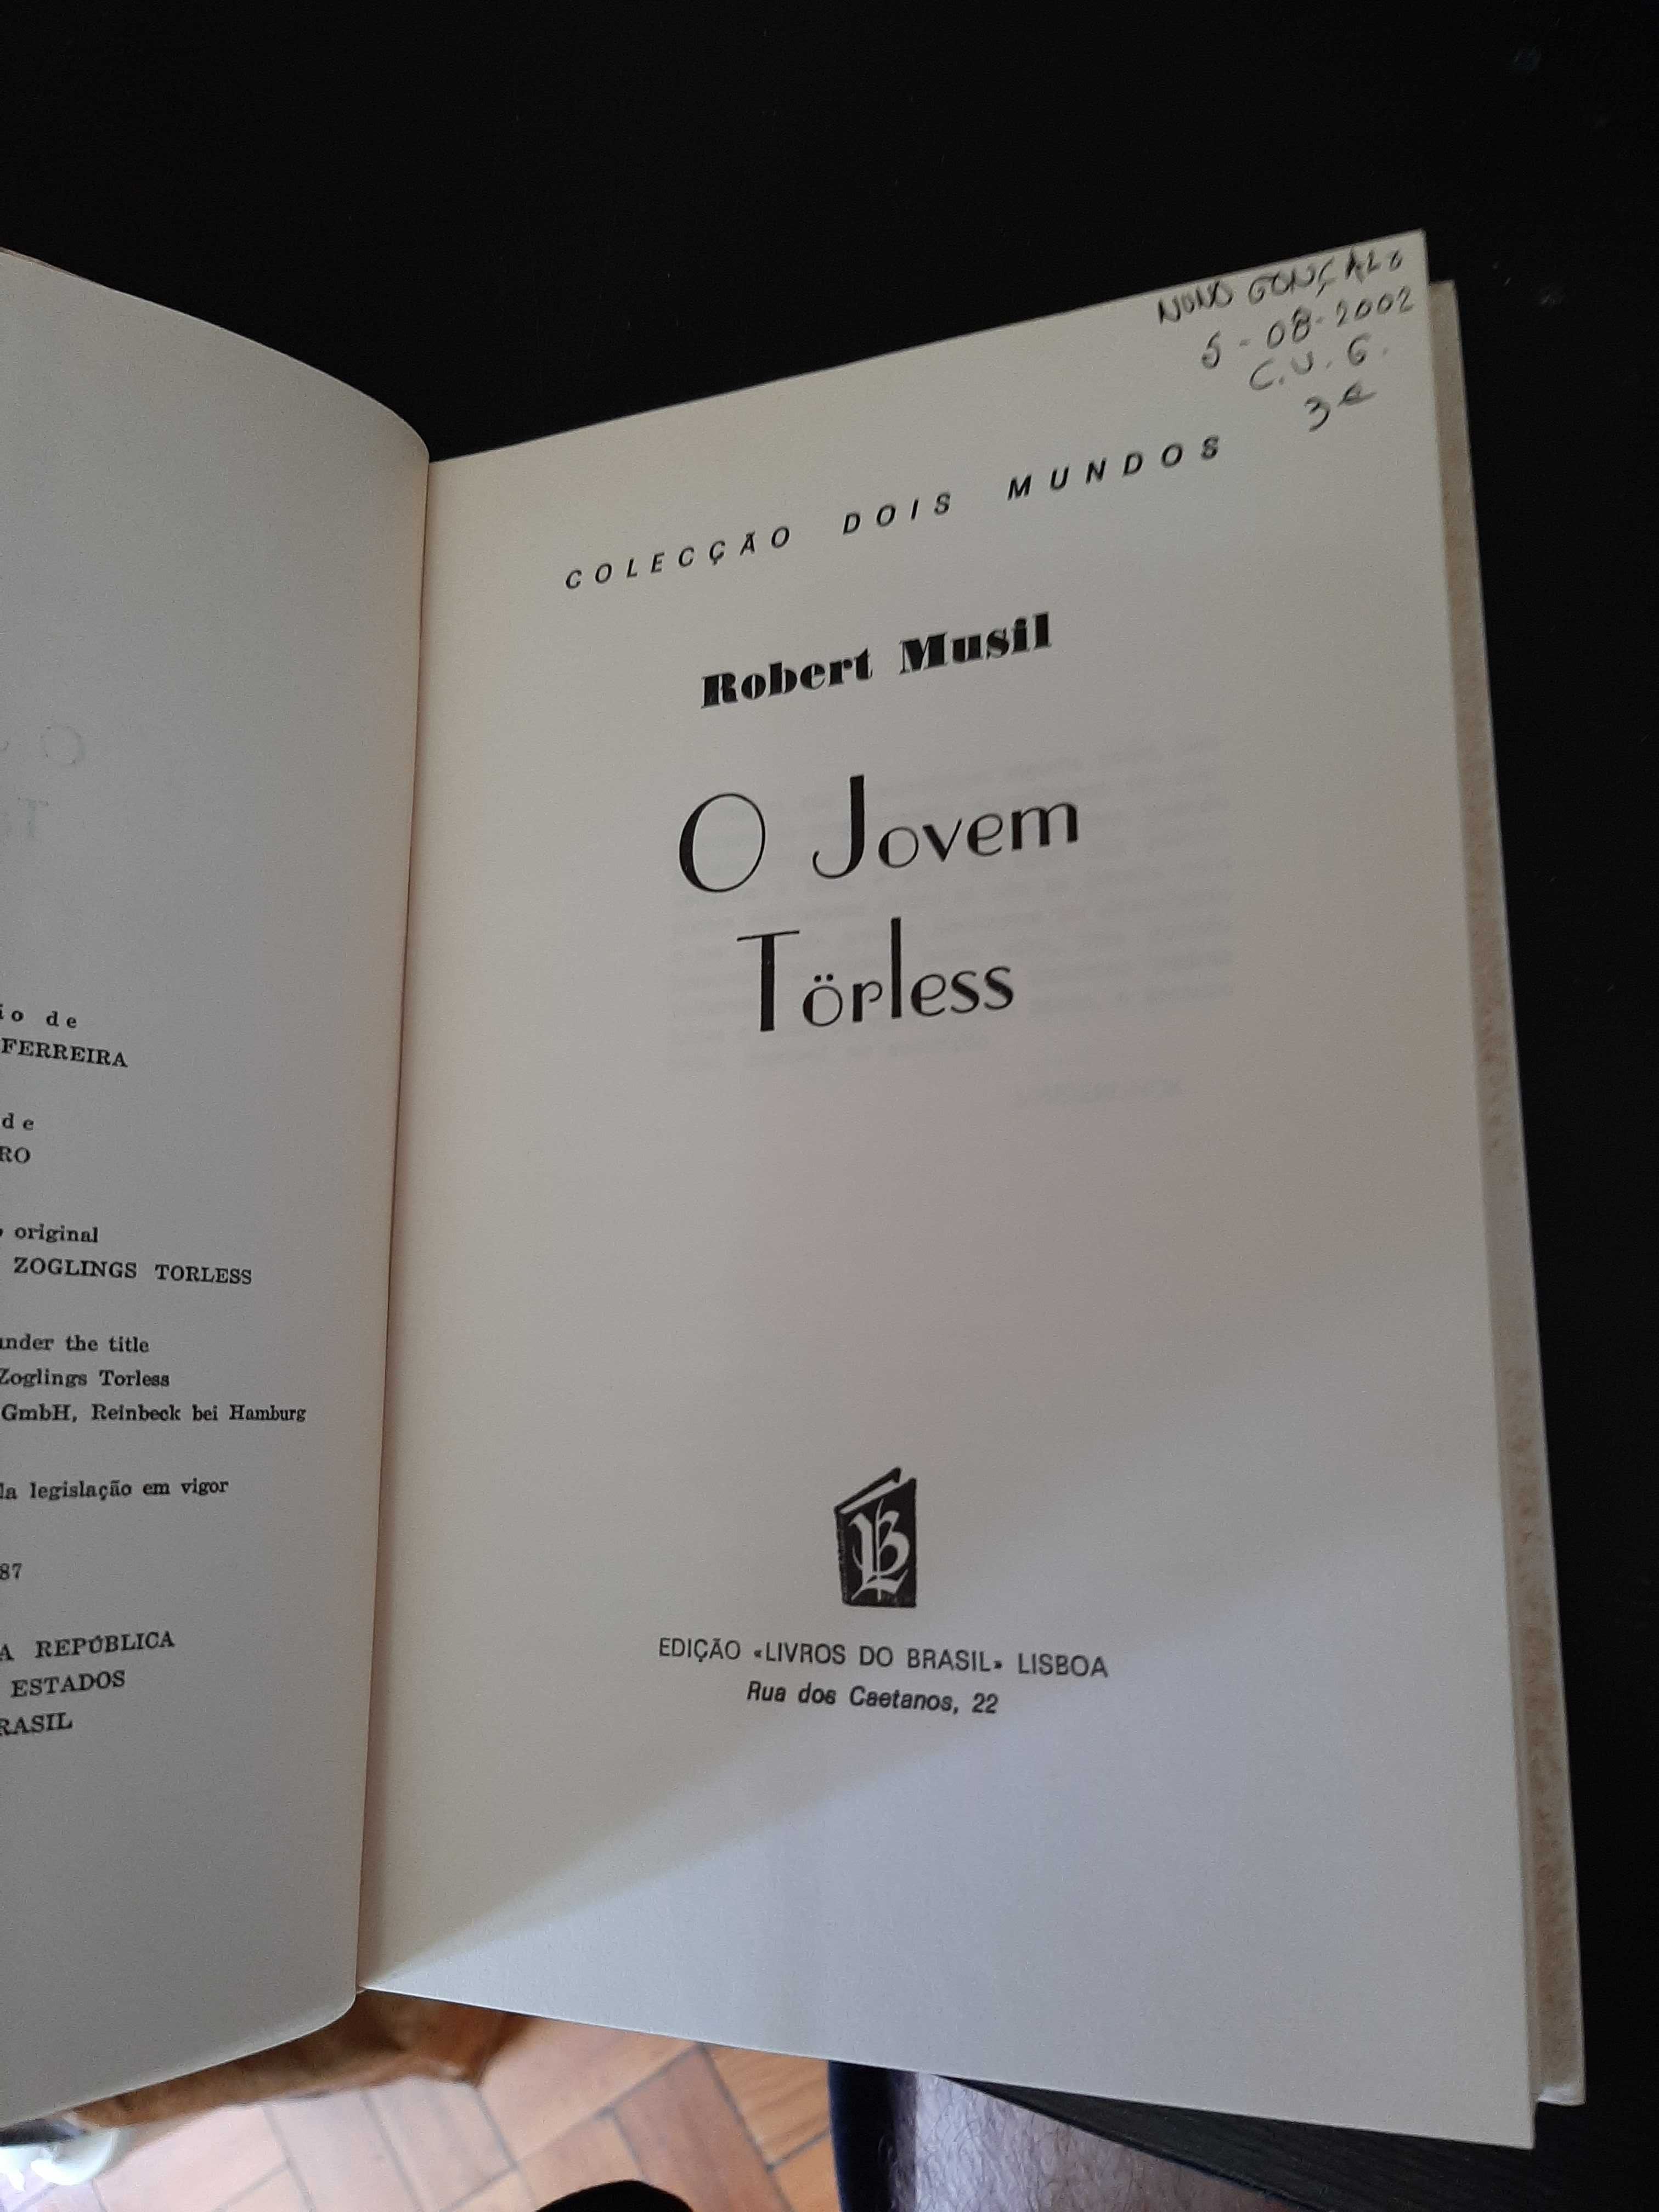 Robert Musil – O Jovem Törless